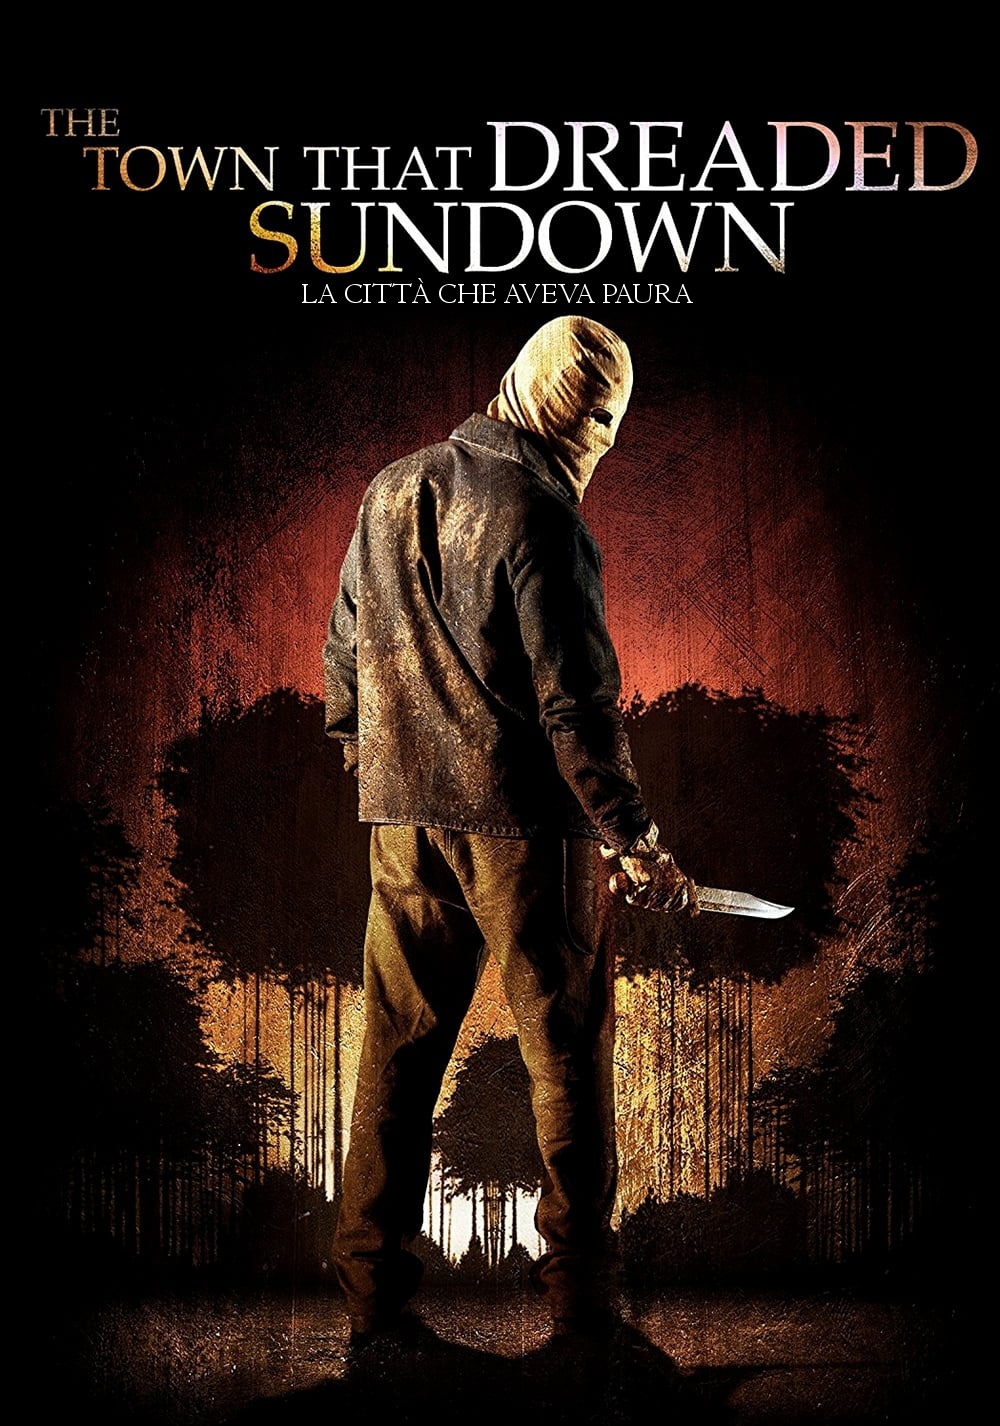 The Town That Dreaded Sundown – La città che aveva paura [HD] (2015)